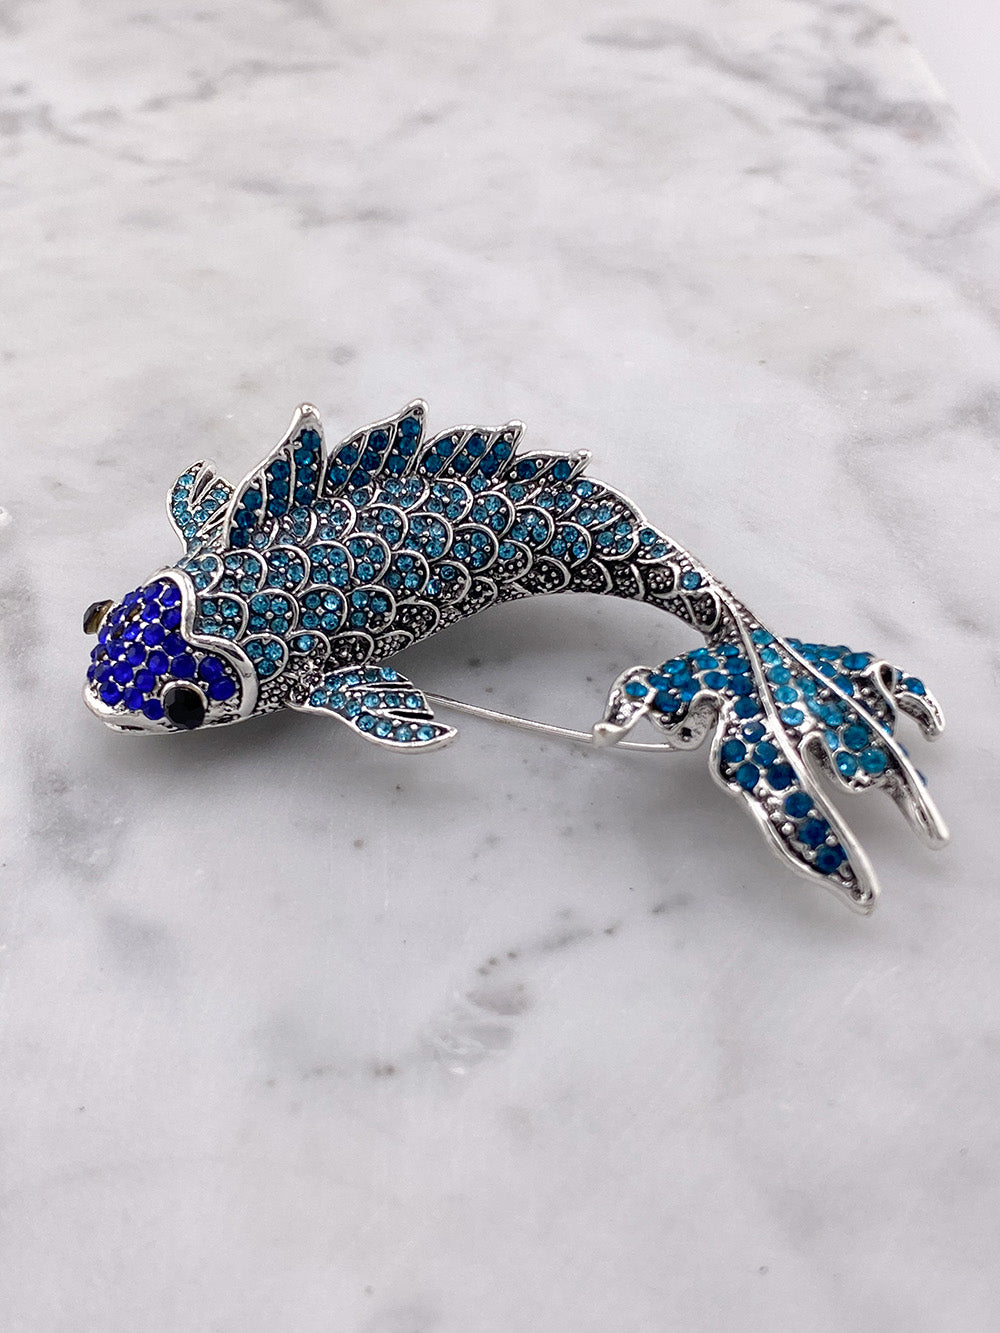 Blue Koi Carp brooch